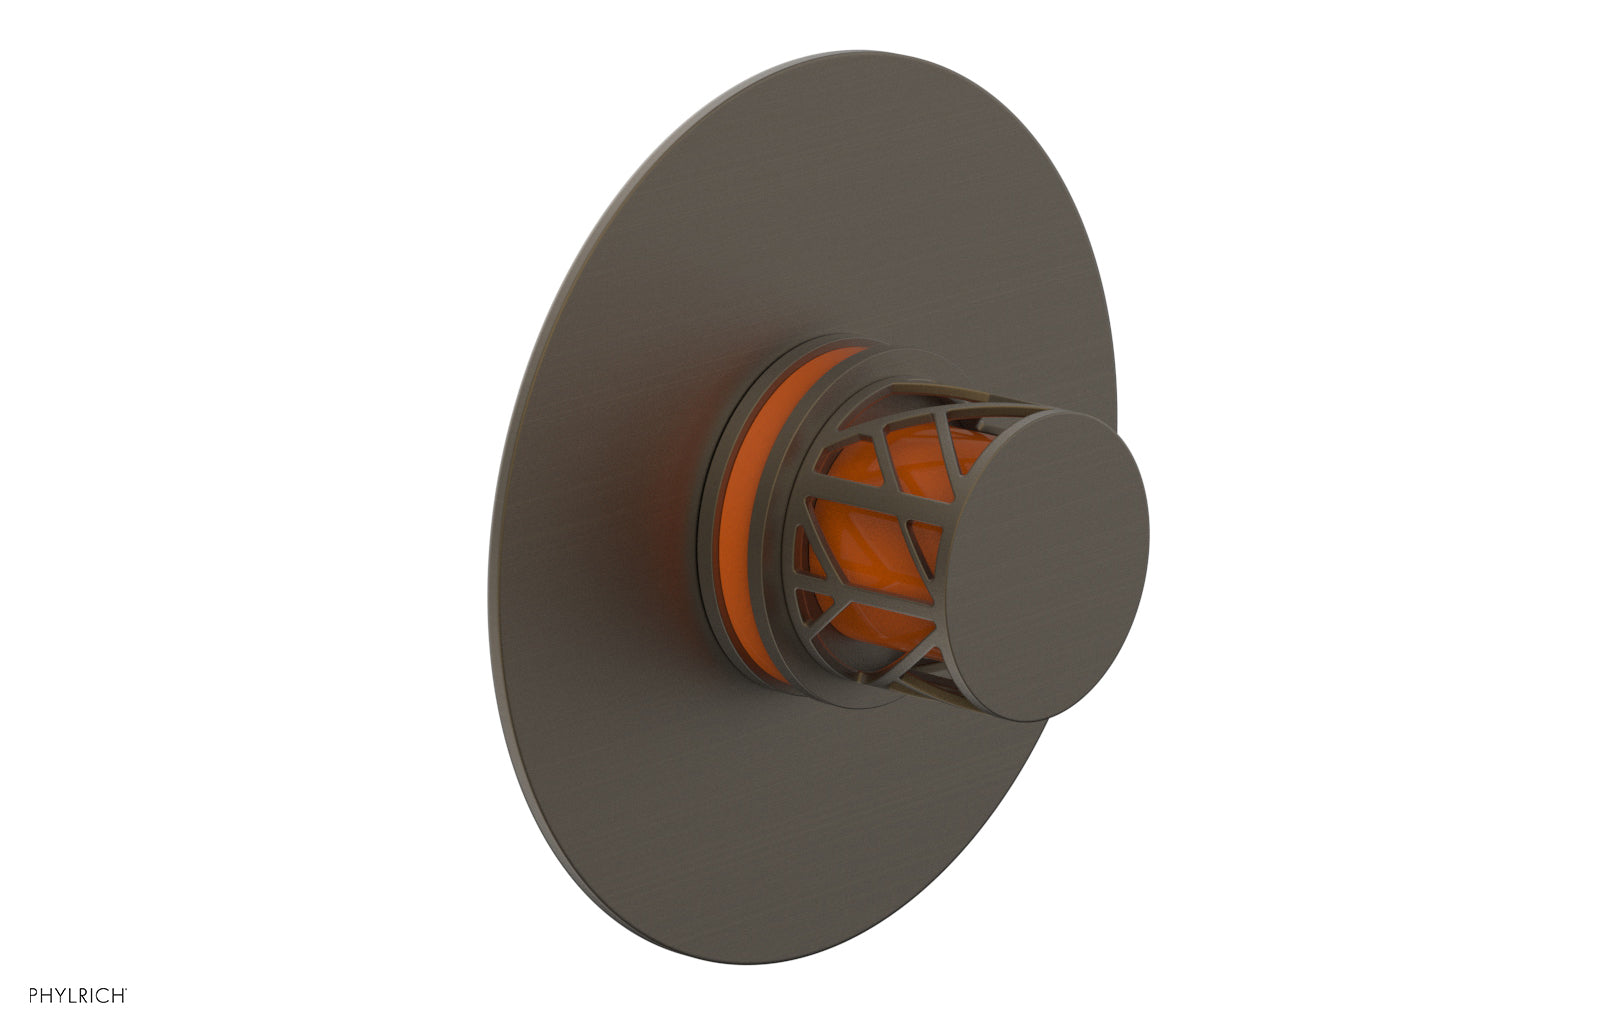 Phylrich JOLIE Pressure Balance Shower Plate & Handle Trim, Round Handle with "Orange" Accents